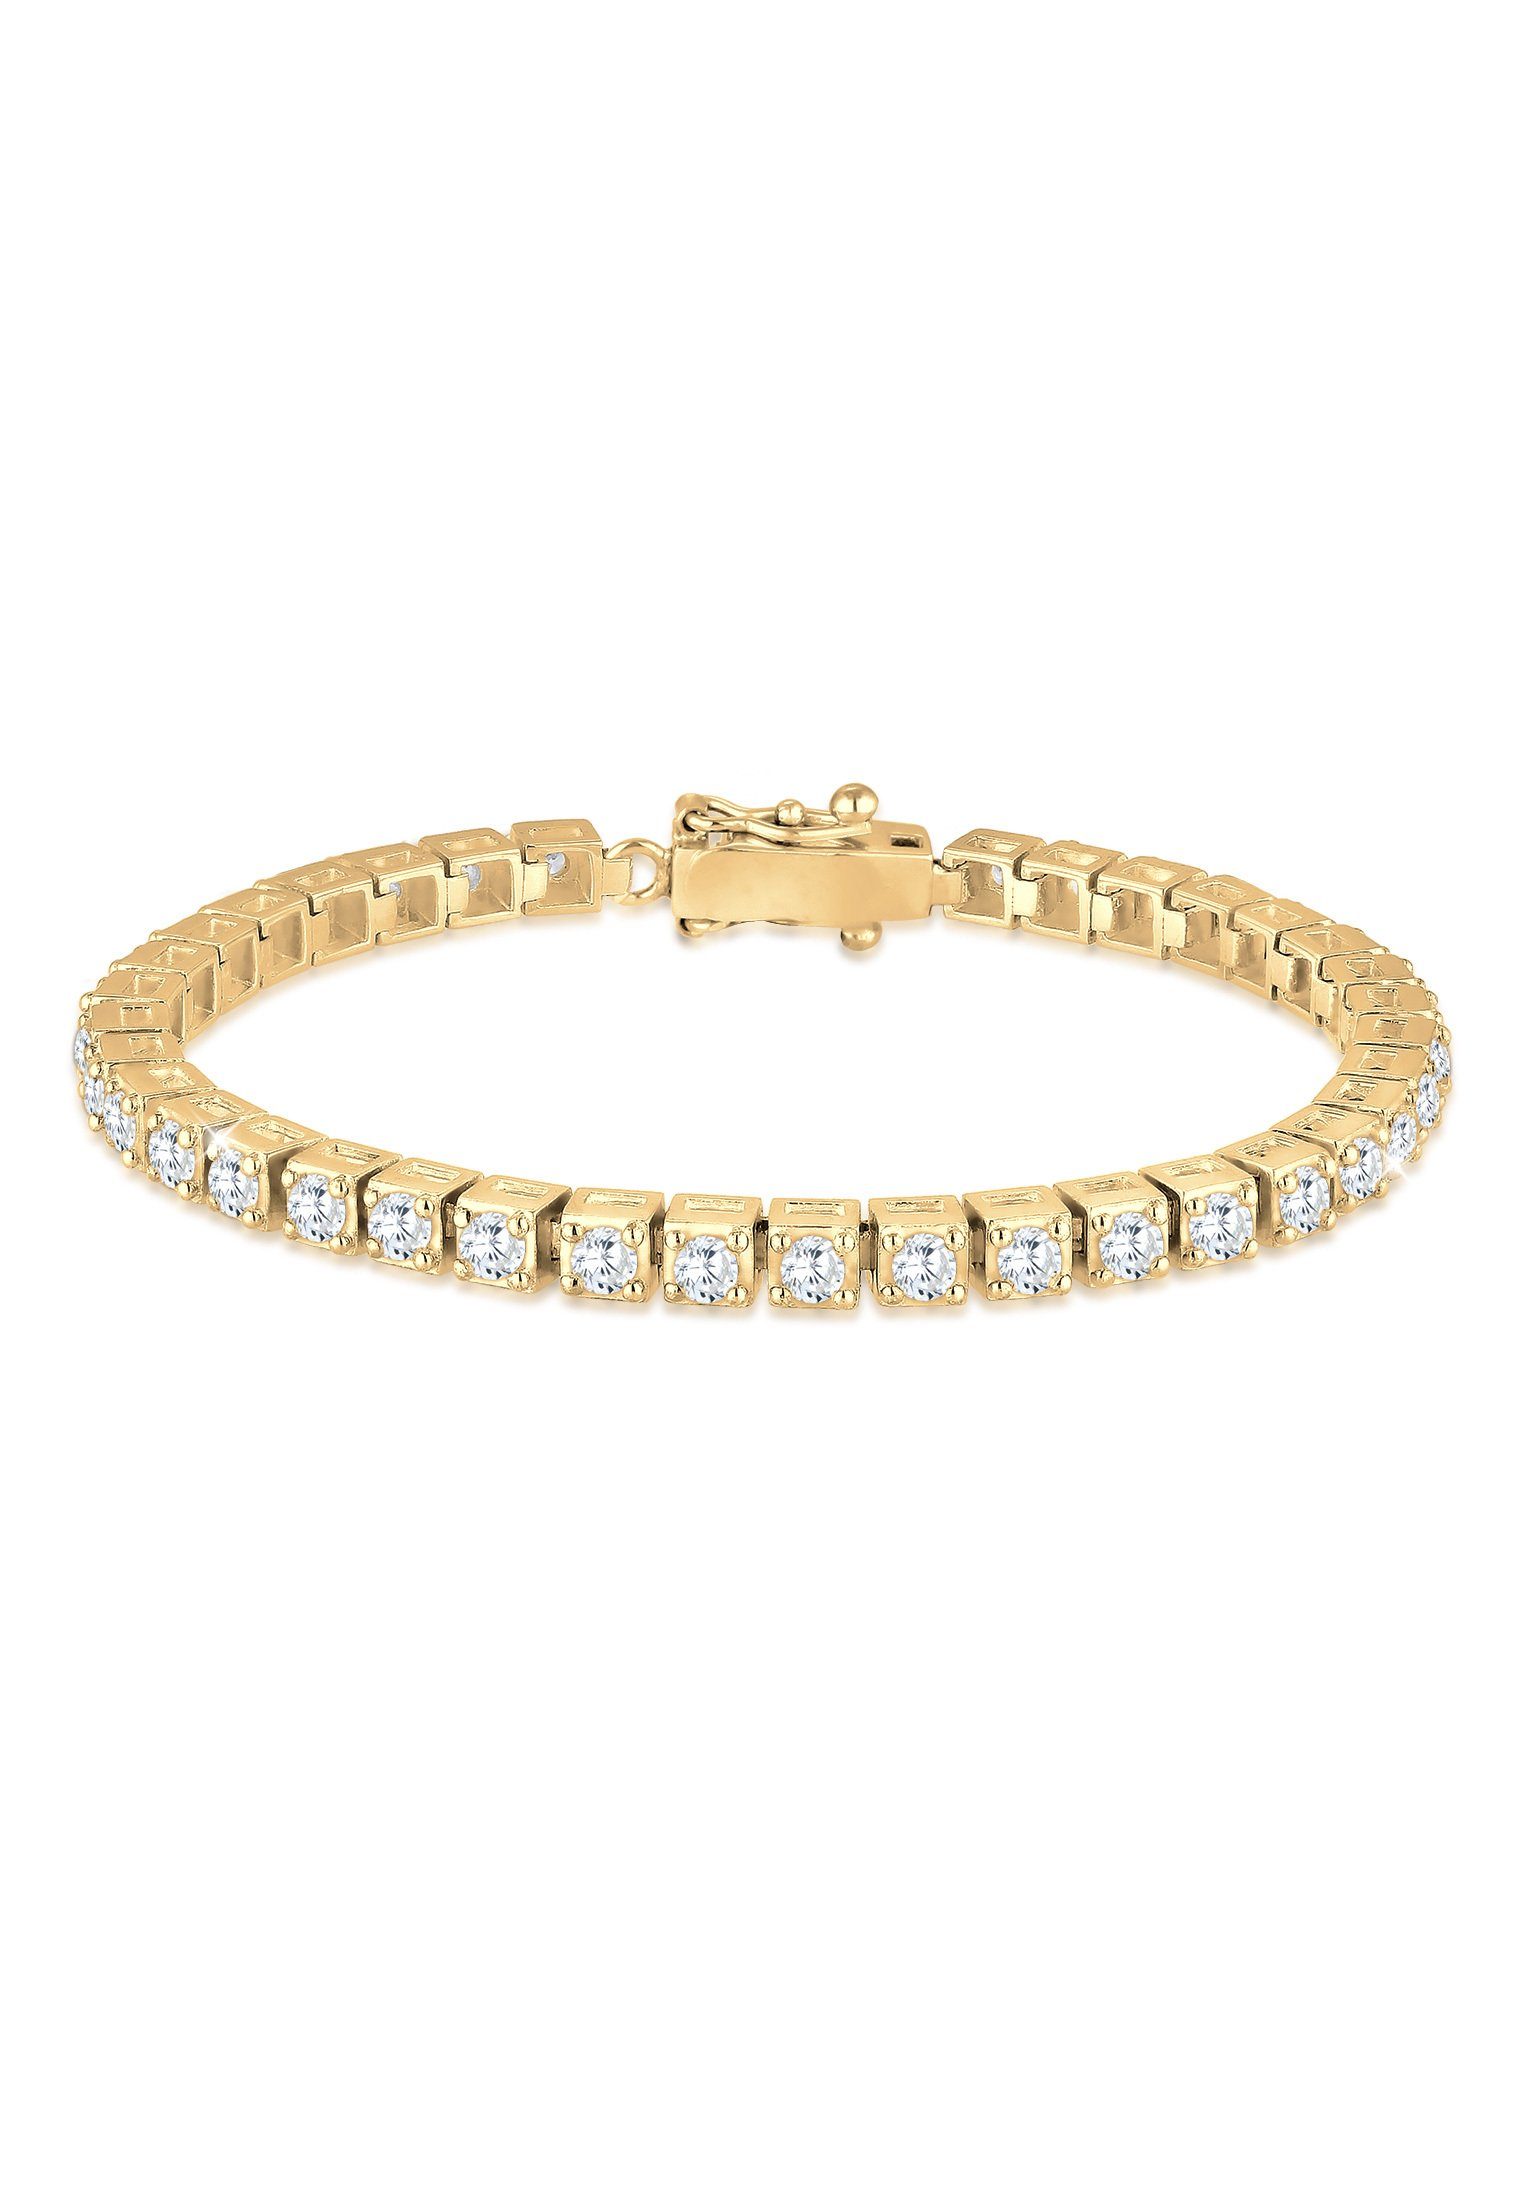 Zirkonia Tennisarmband Gold 925 Kristalle Premium Elli Silber Armband mit